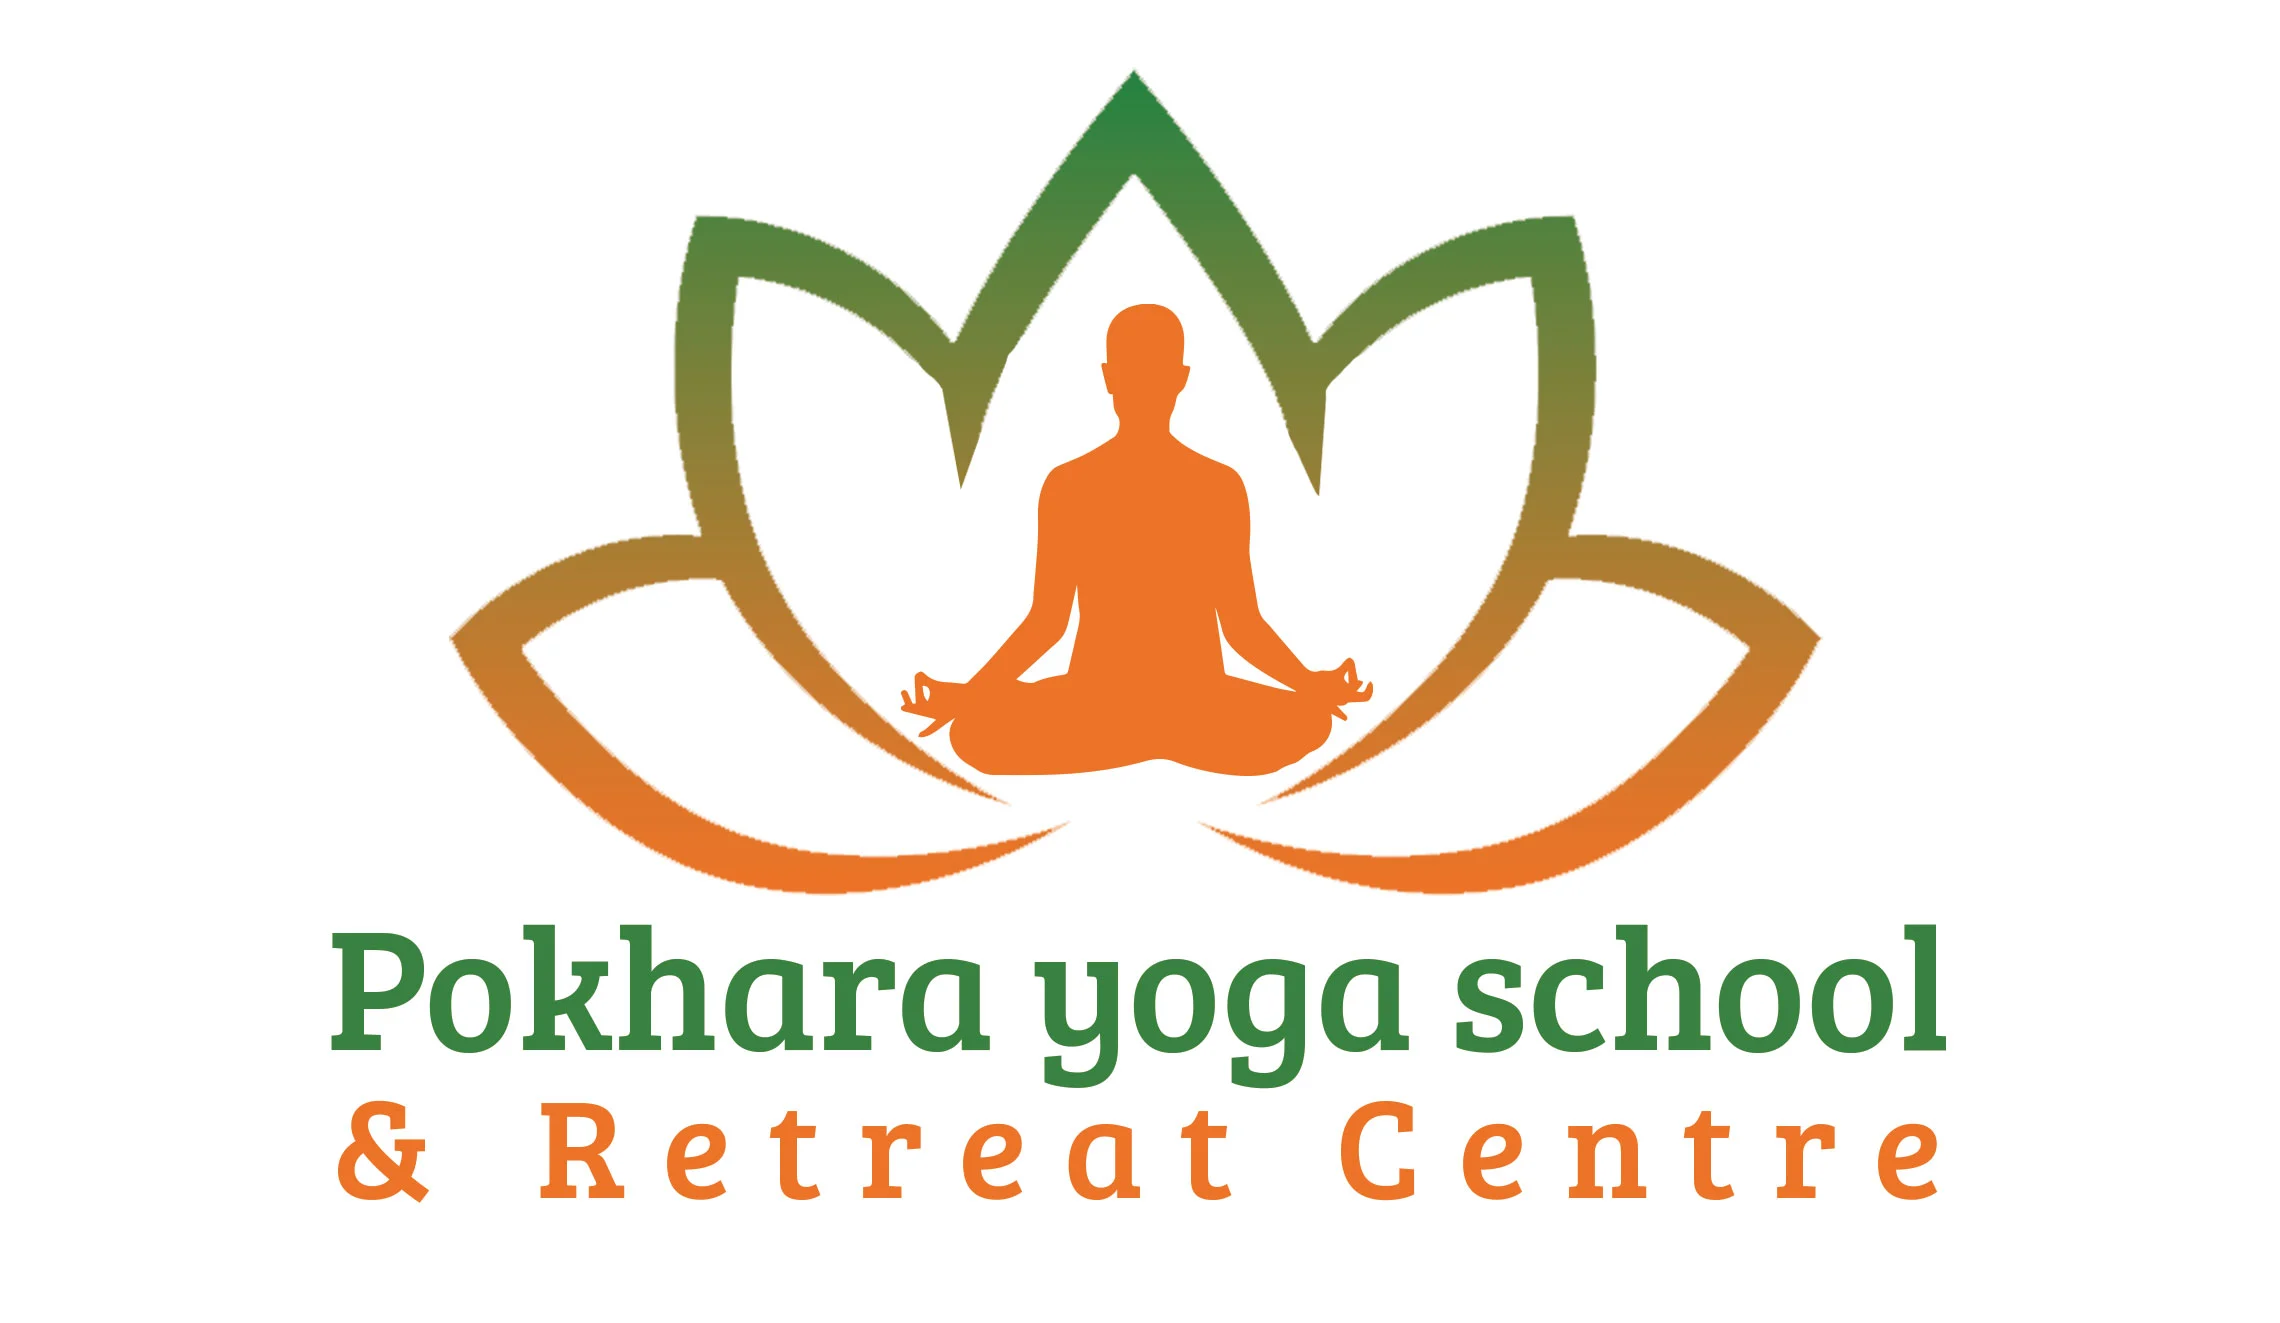 Yoga school in Nepal